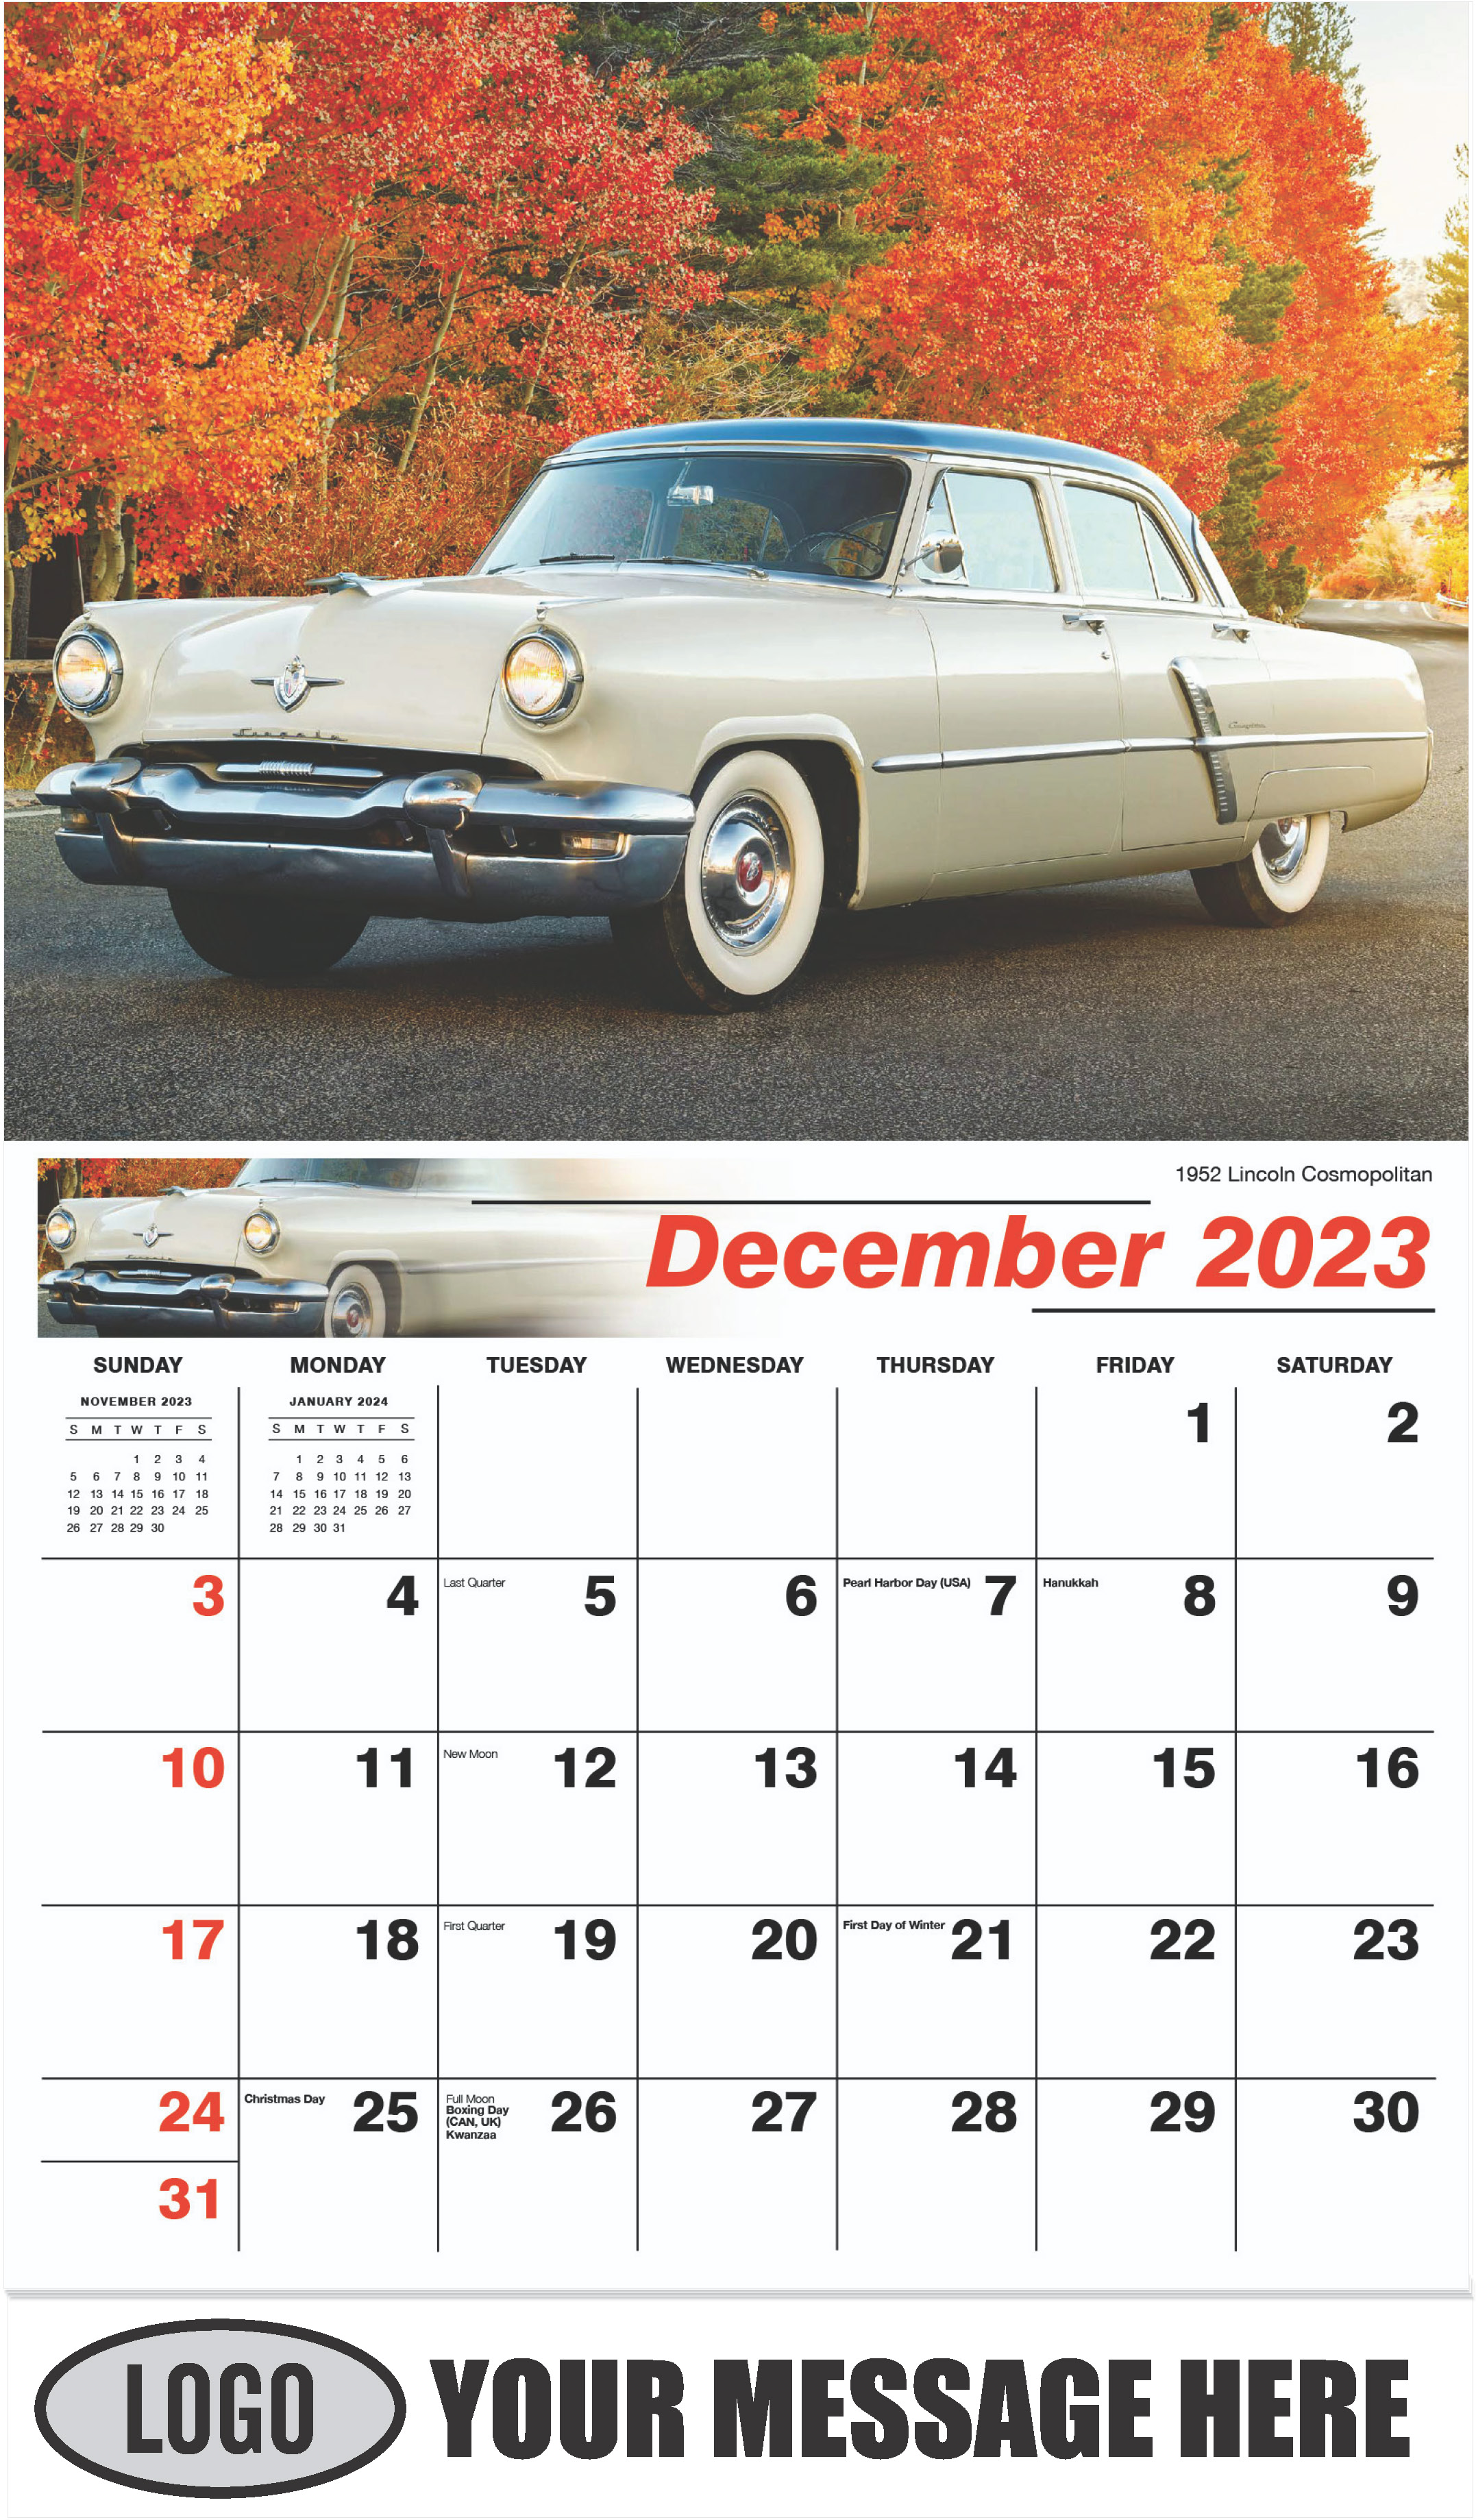 1952 Lincoln Cosmopolitan - December 2023 - Henry's Heritage Ford Cars 2023 Promotional Calendar